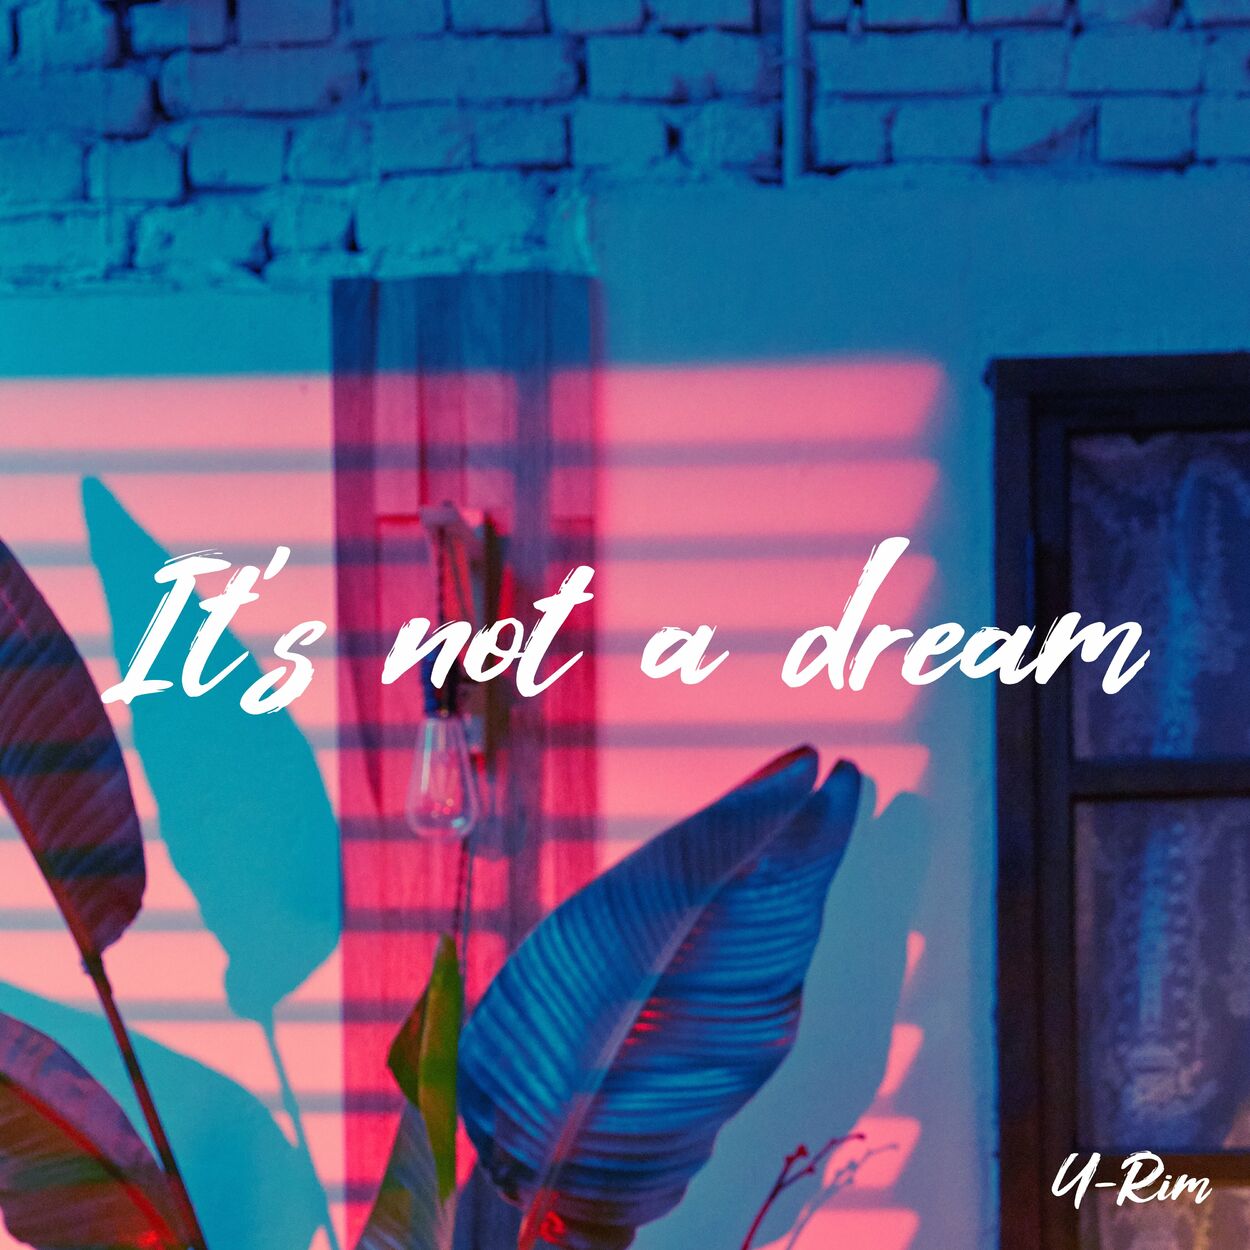 U-Rim – It’s not a dream – Single